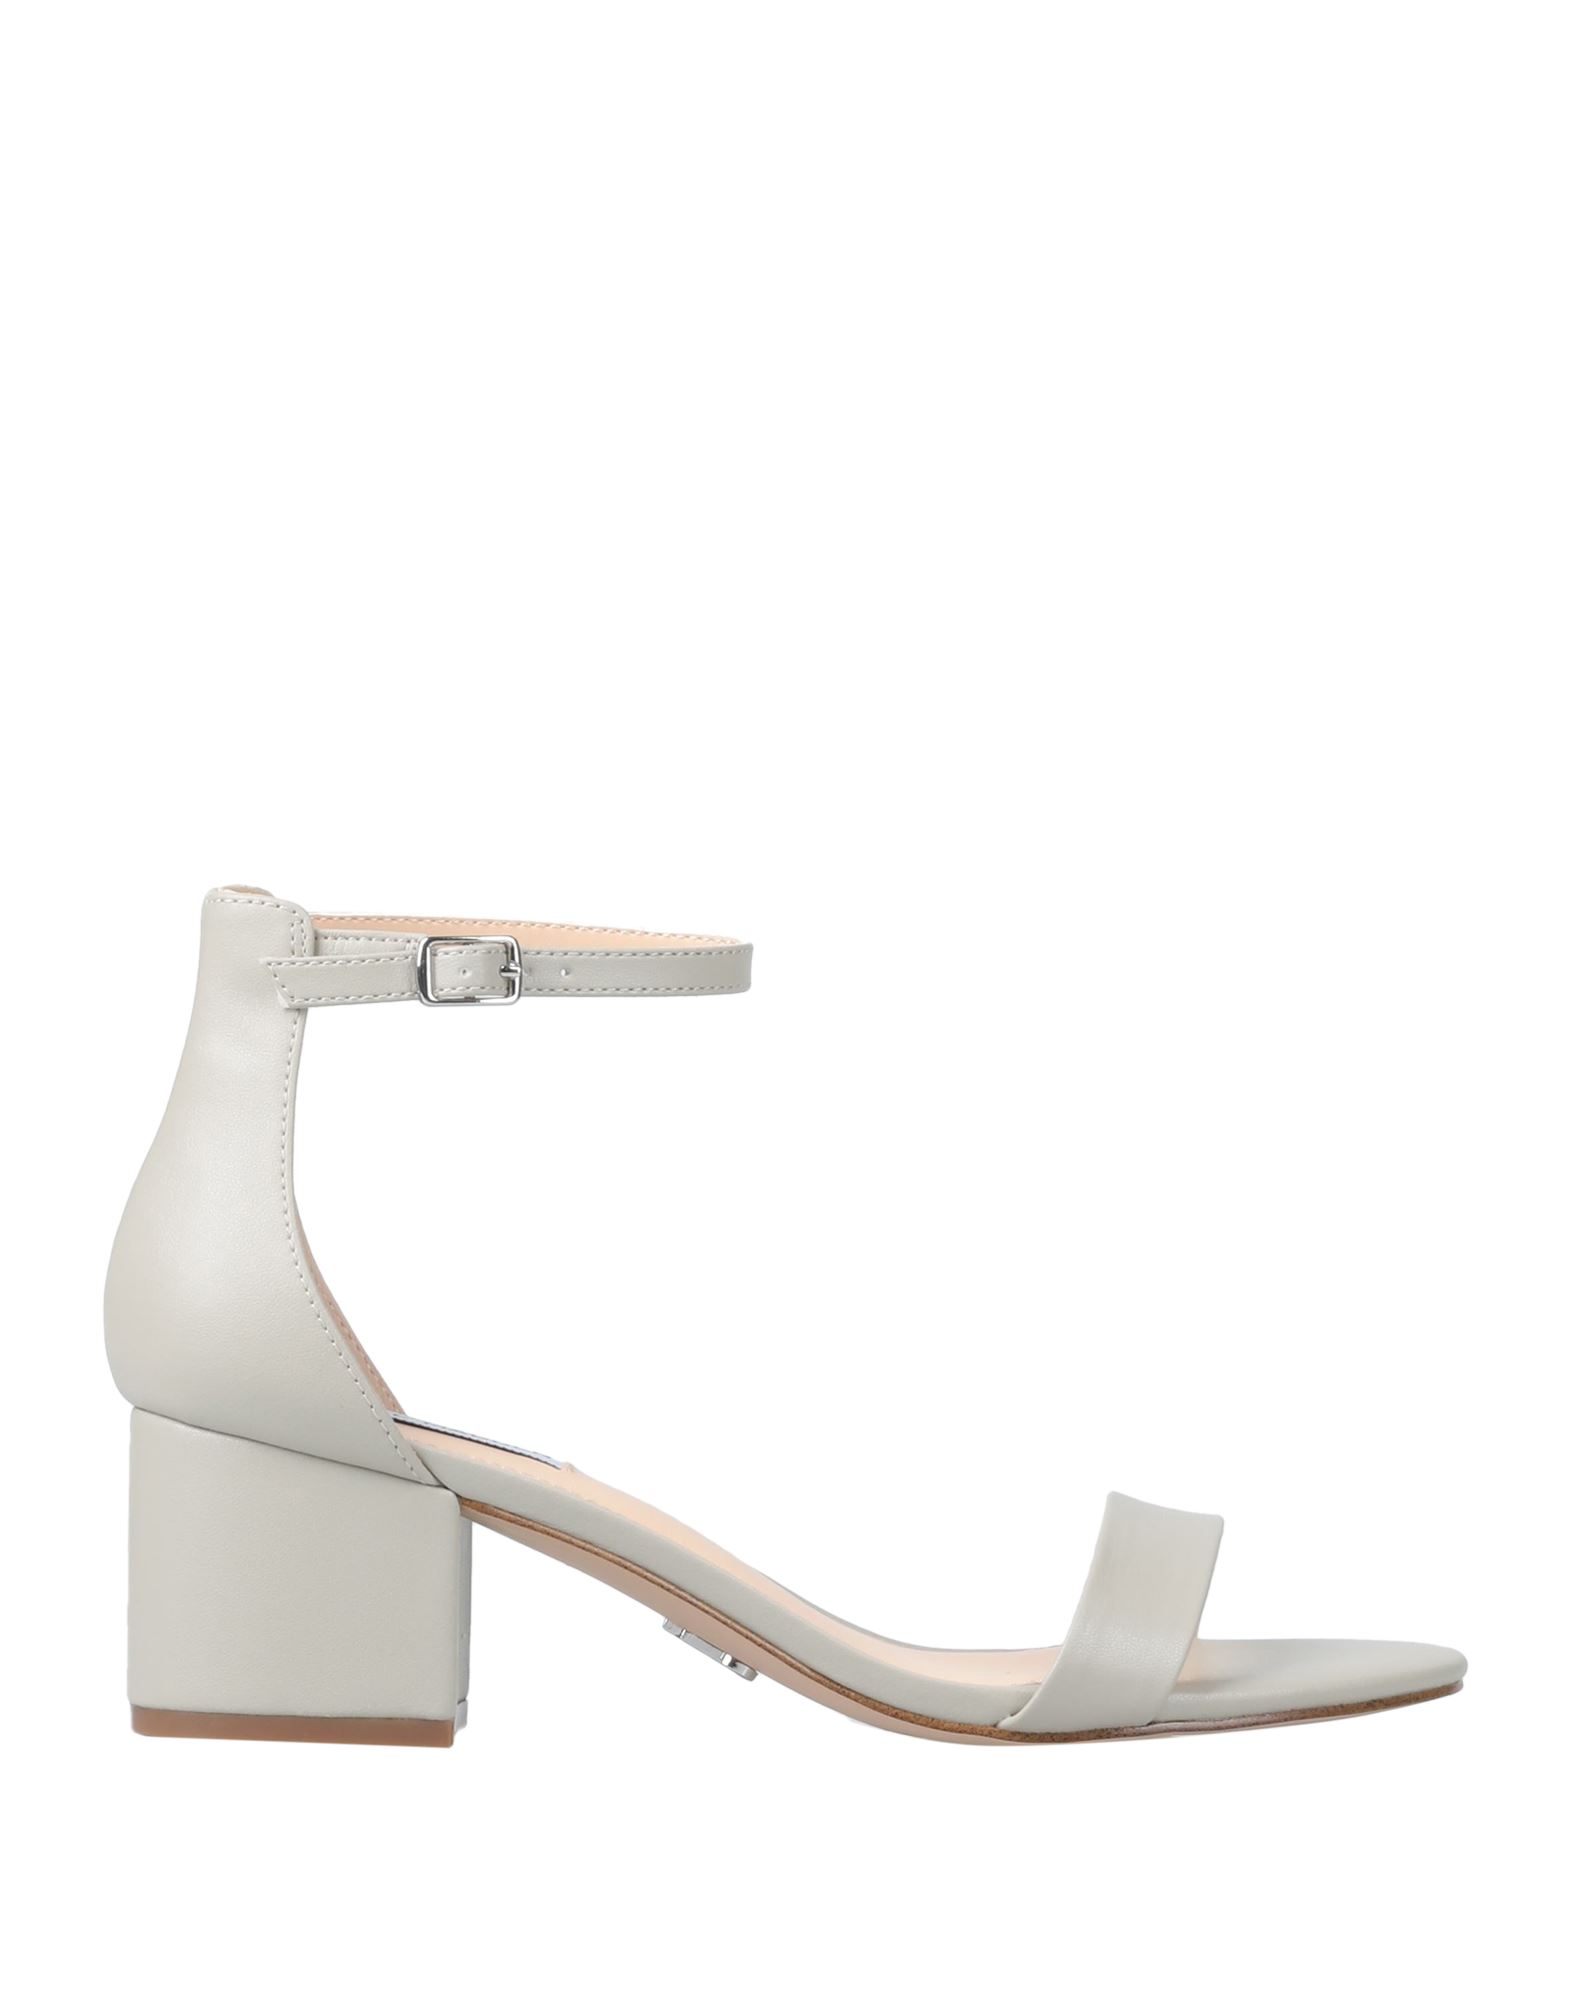 Shop Steve Madden Woman Sandals Light Grey Size 6.5 Soft Leather